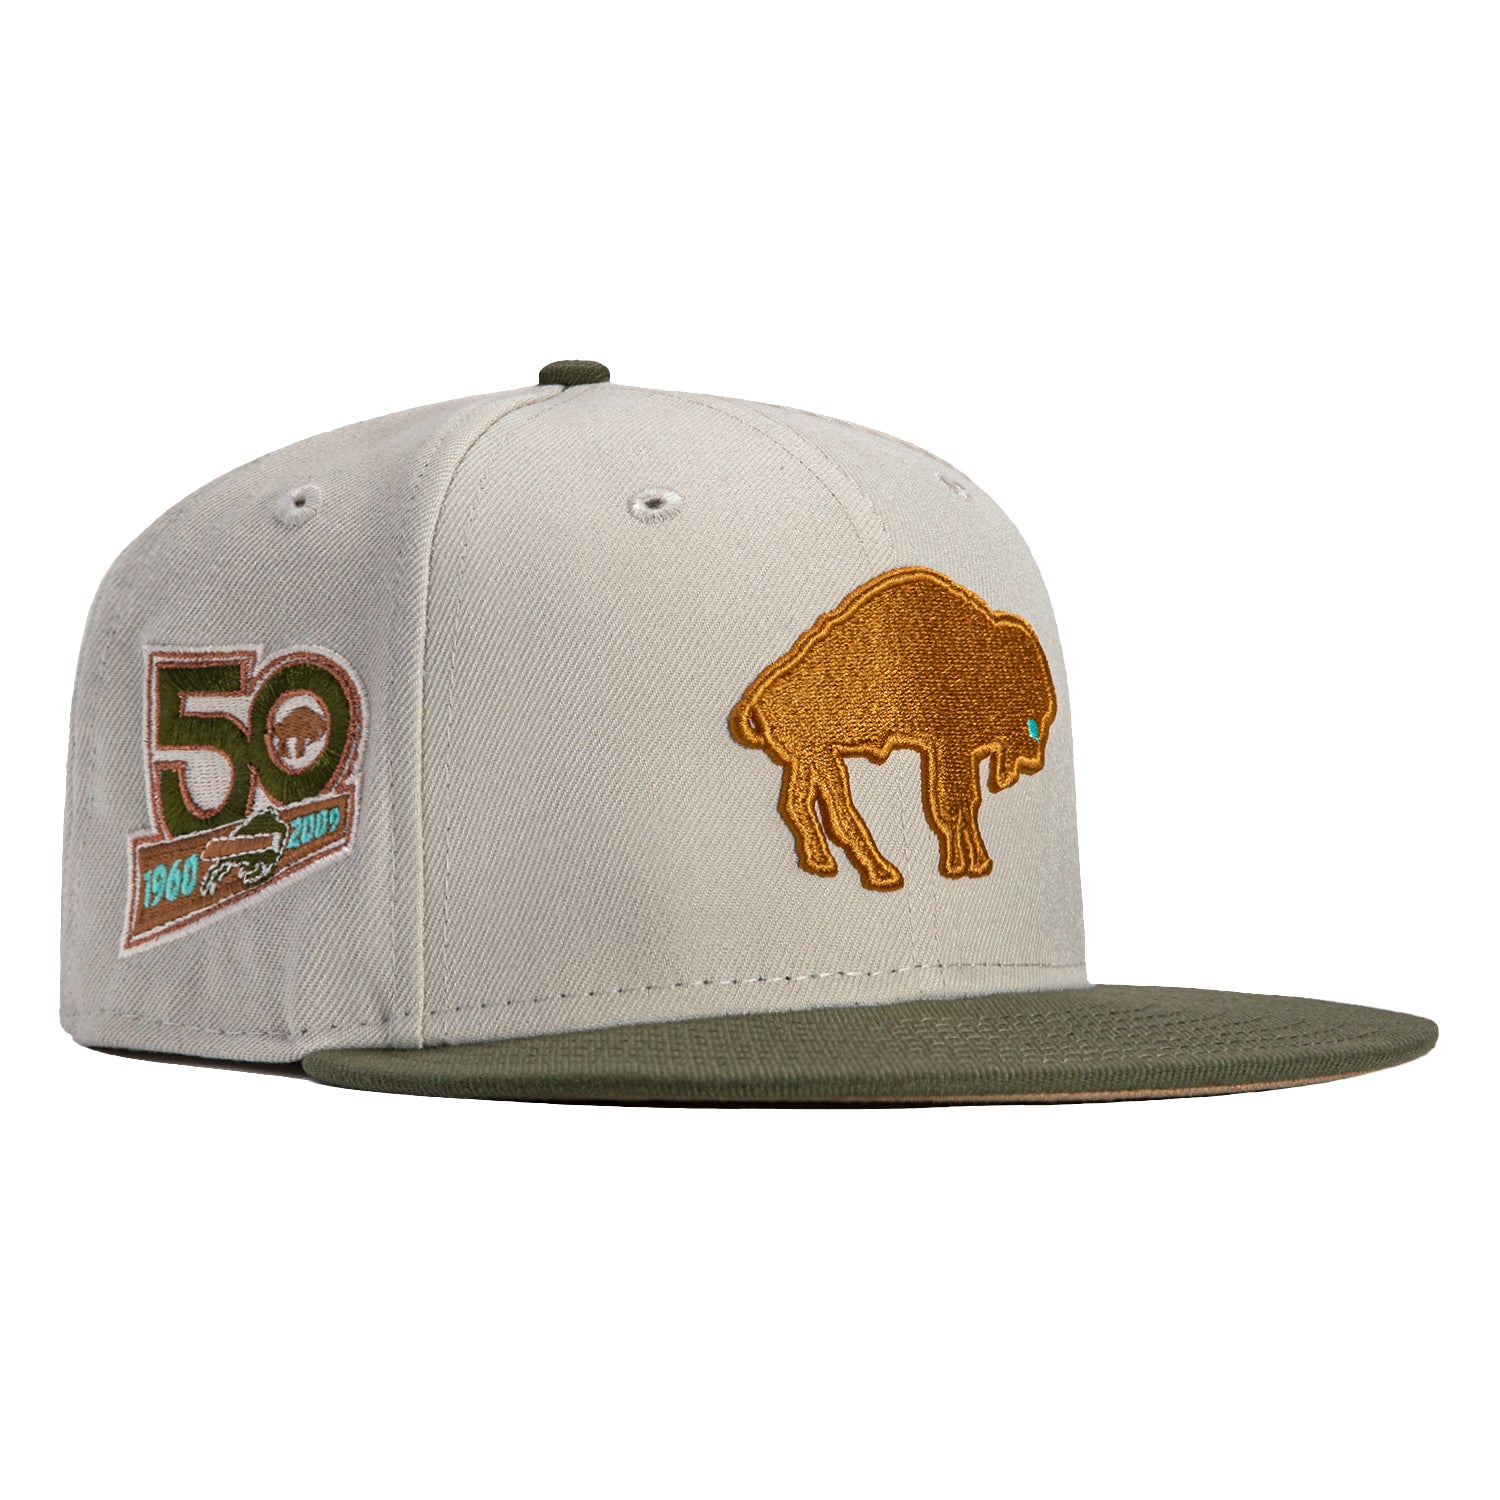 50th Anniv Patch Bucks Cap by Mitchell & Ness --> Shop Hats